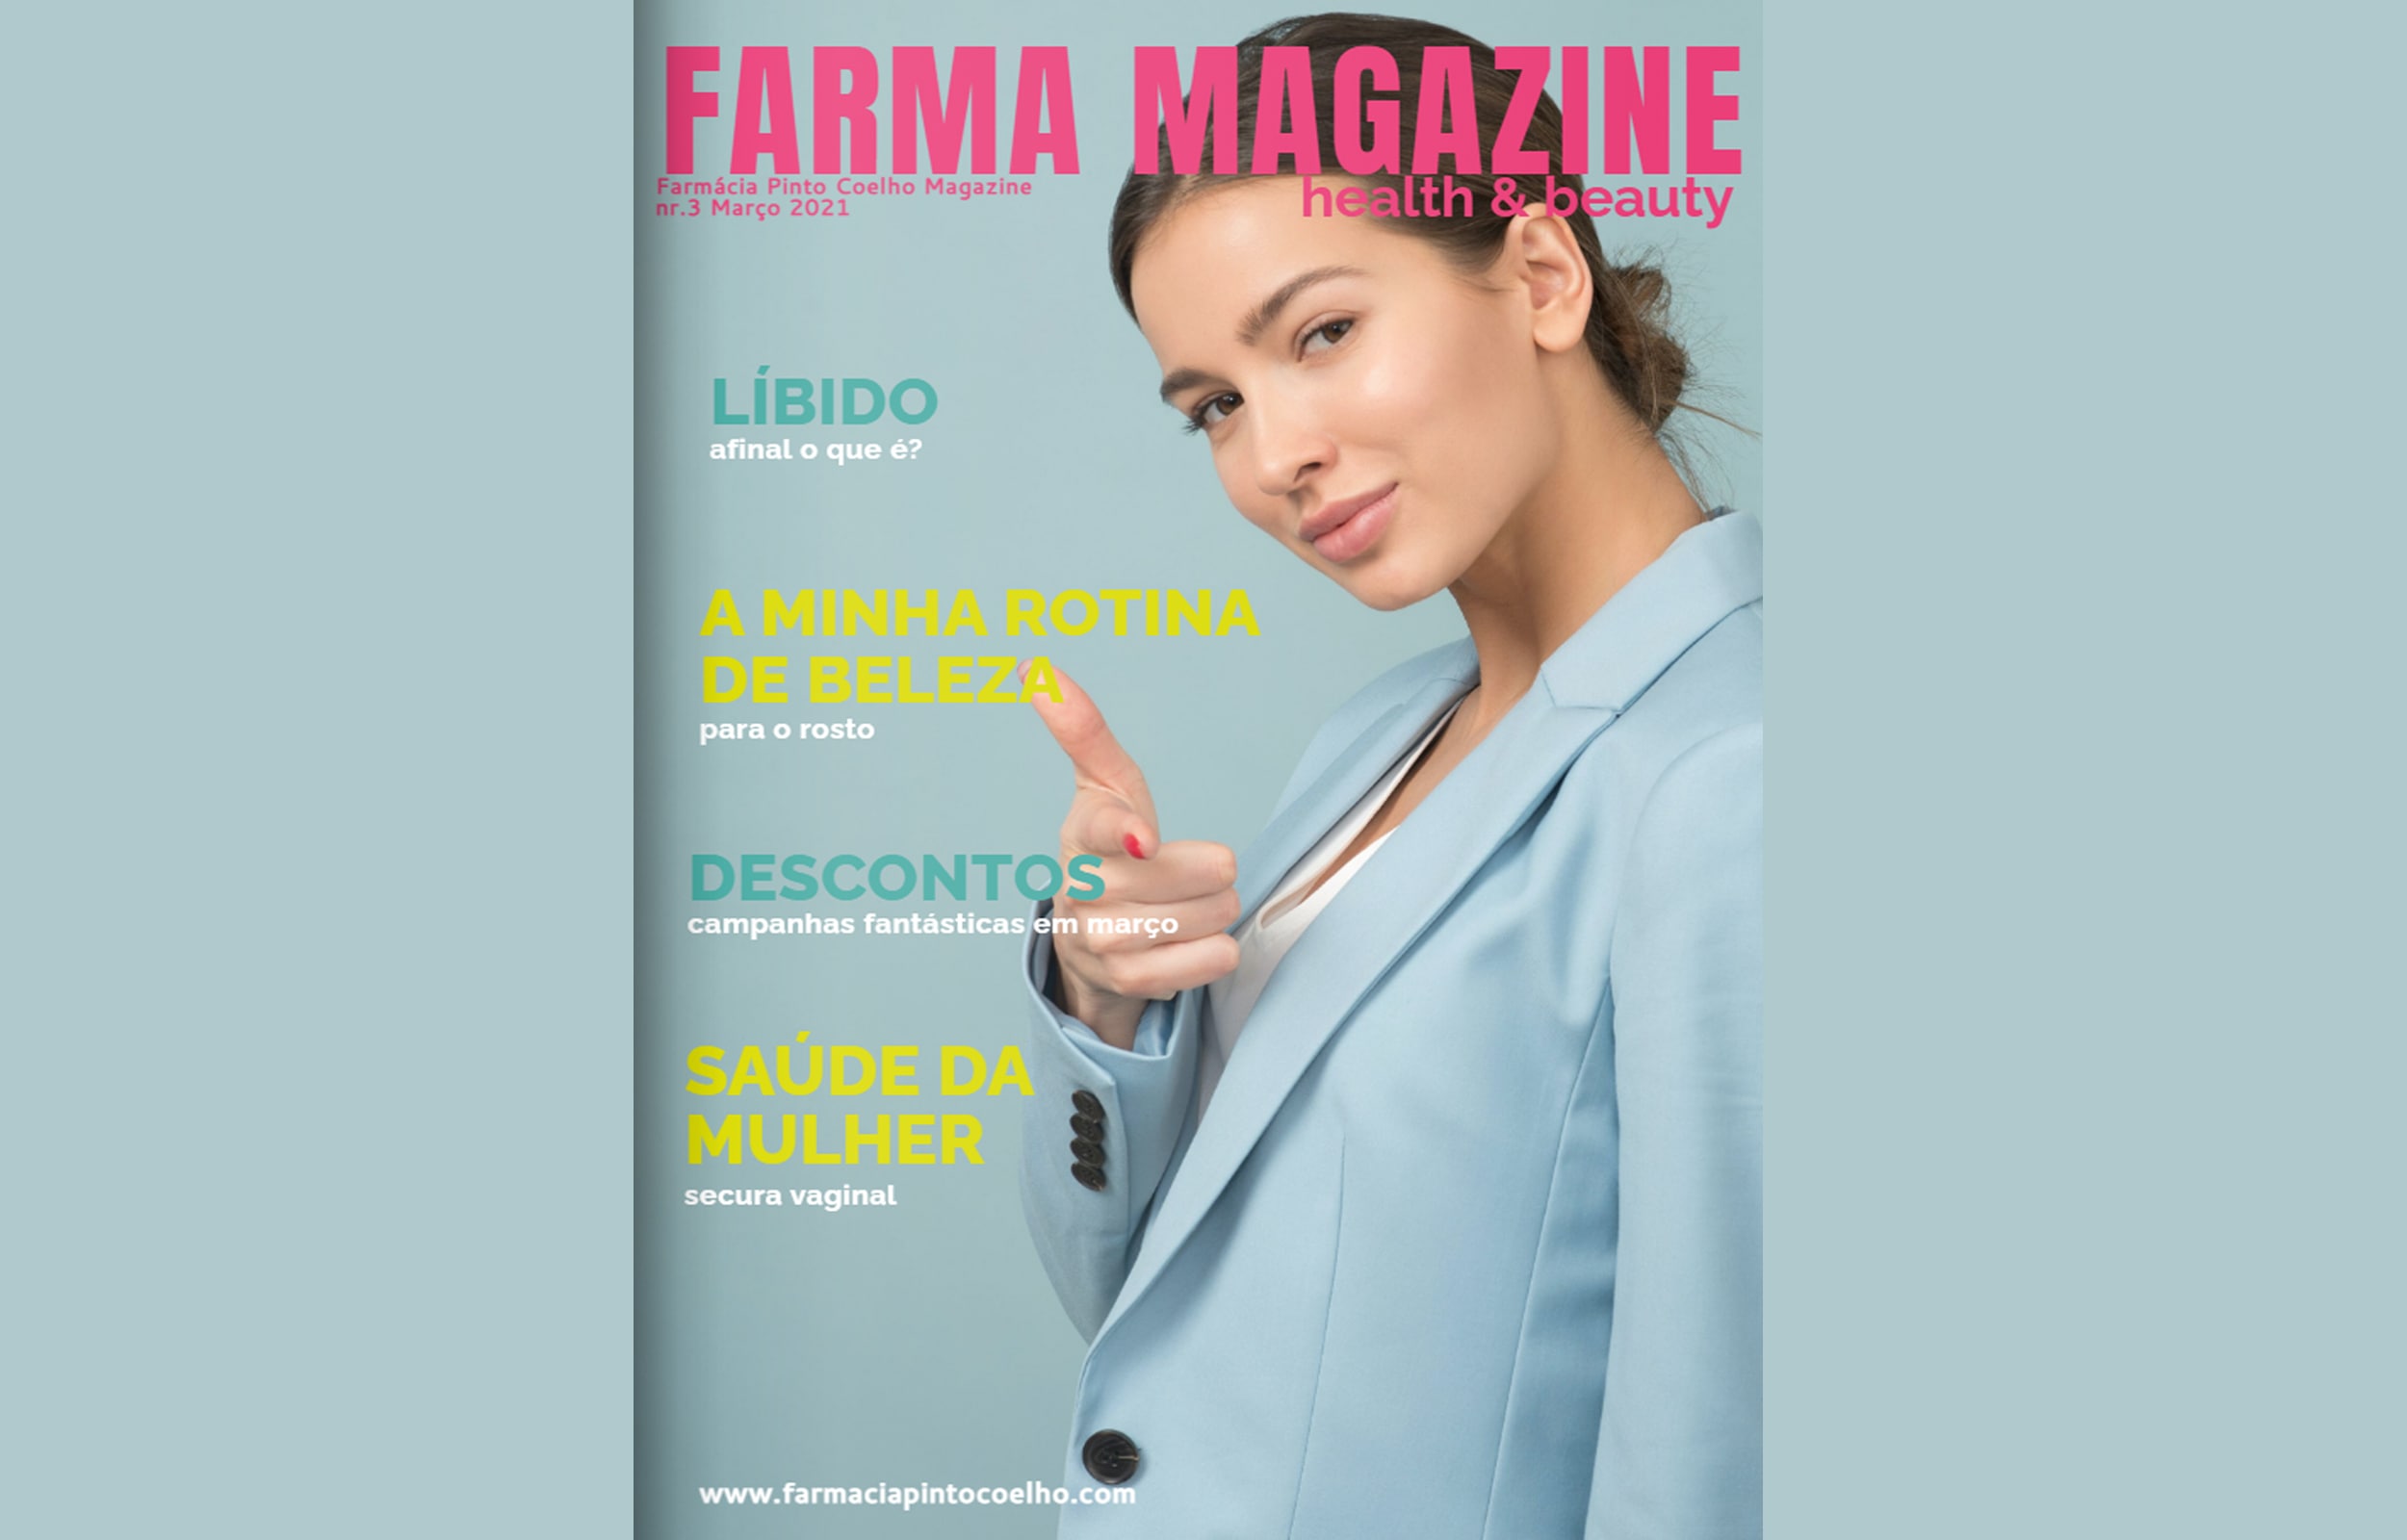 Farma Magazine Health & Beauty N.3